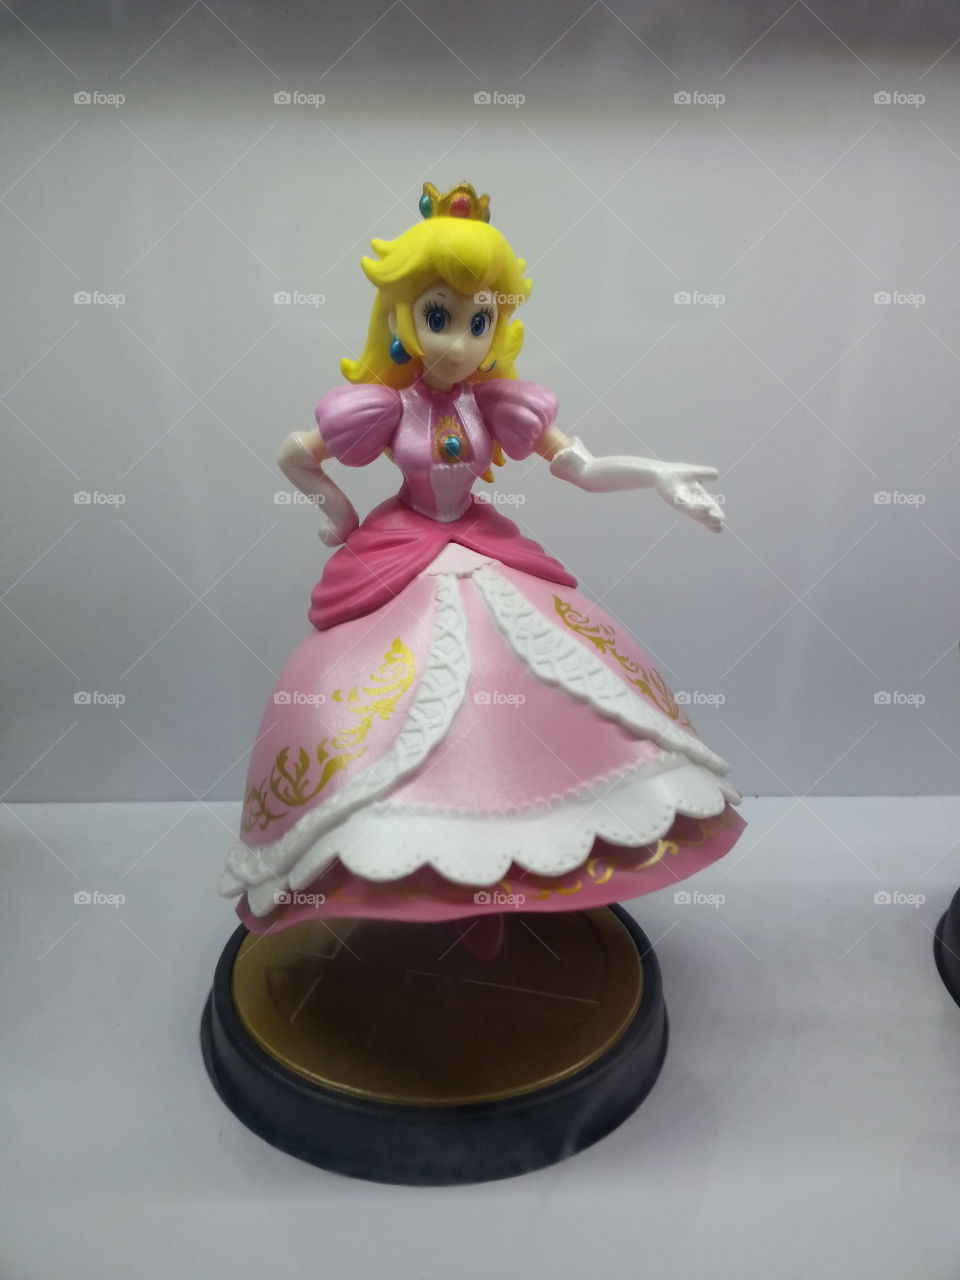 Princess Peach. Princess Peach figurine